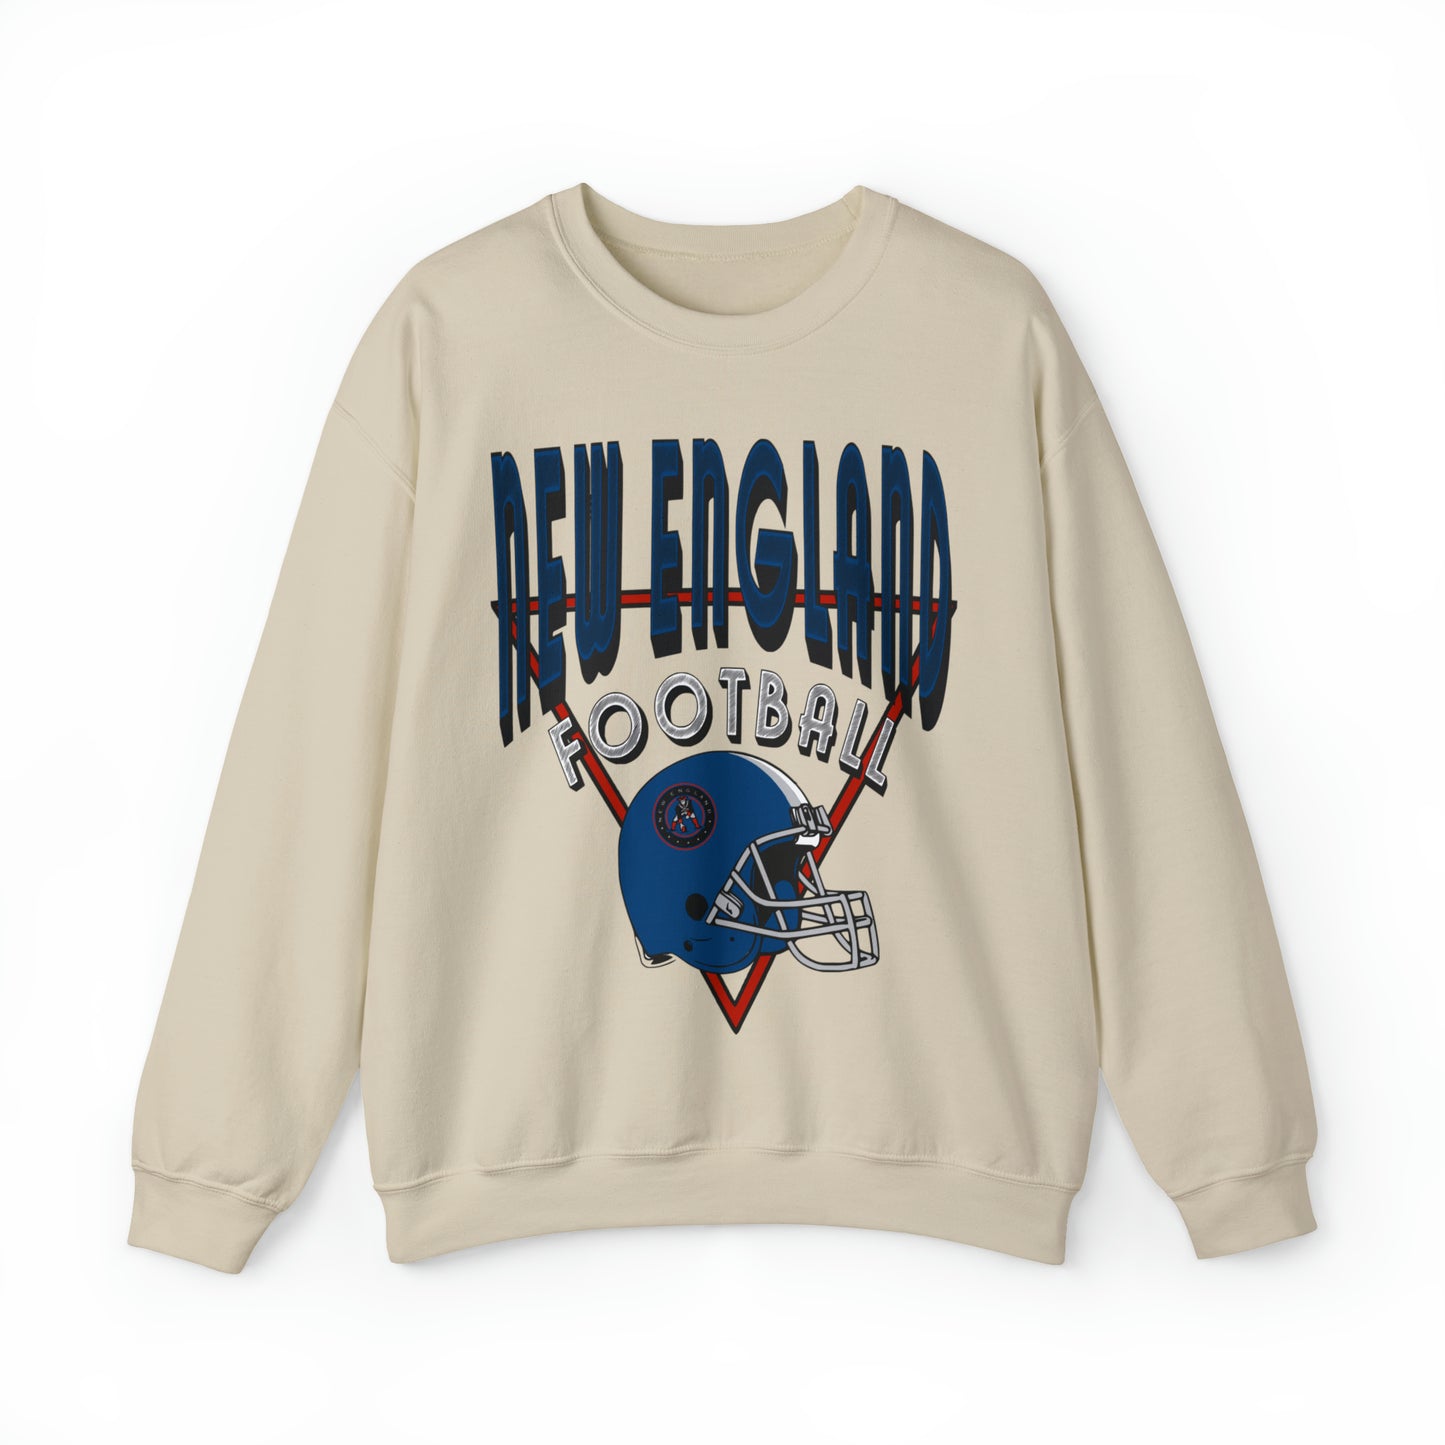 Vintage New England Patriots Sweatshirt - Vintage Style Football Crewneck - Men's & Women's Football Apparel